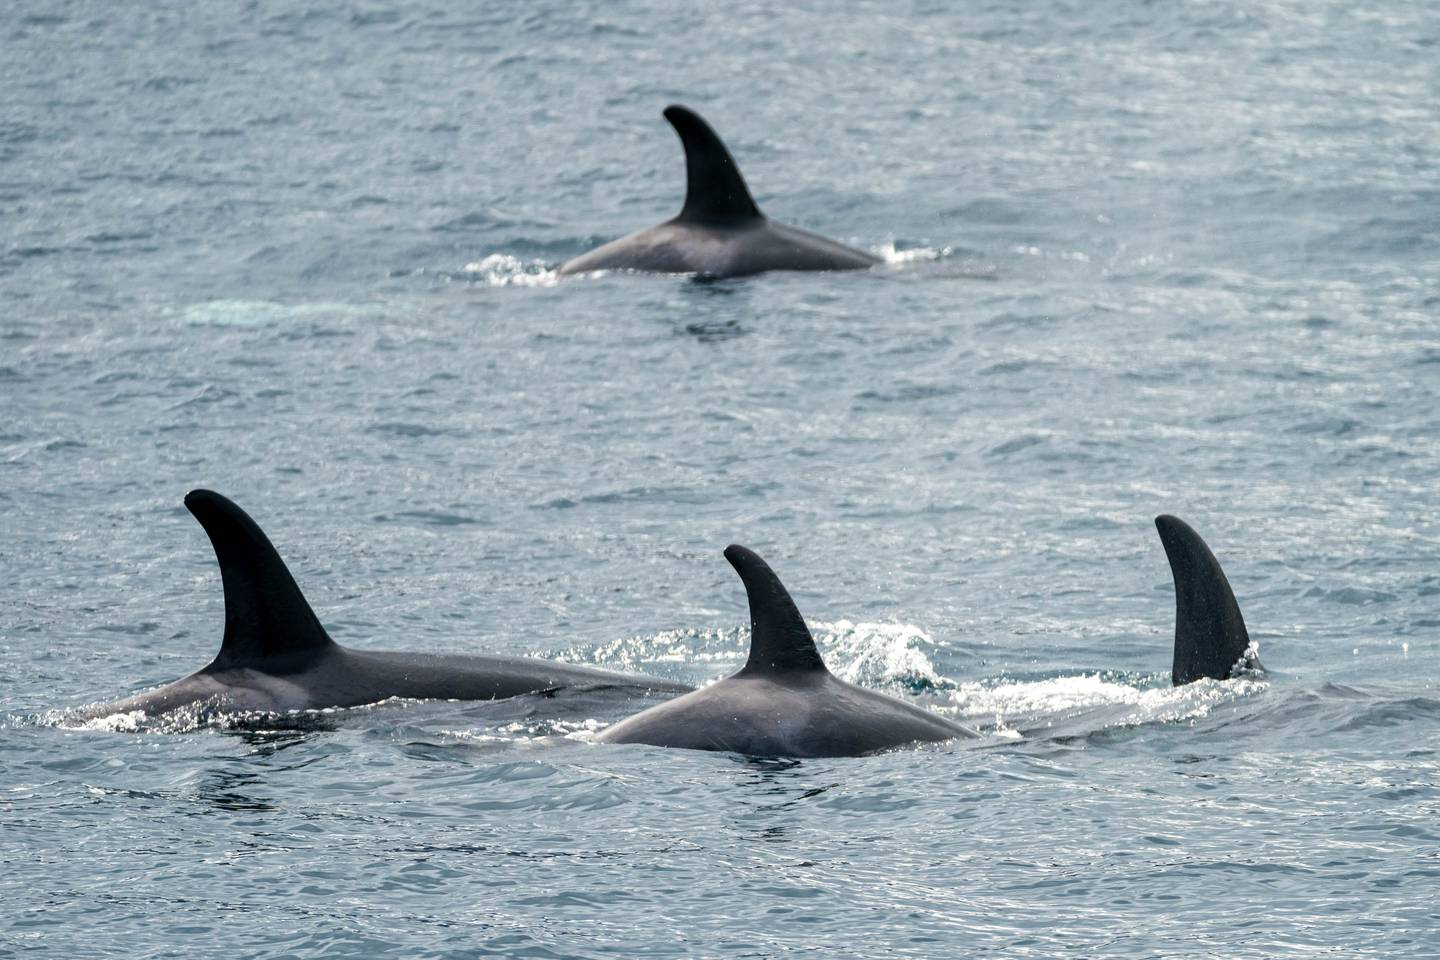 Kenai Fjords National Park, Resurrection Bay, killer whale, orca, orca whale